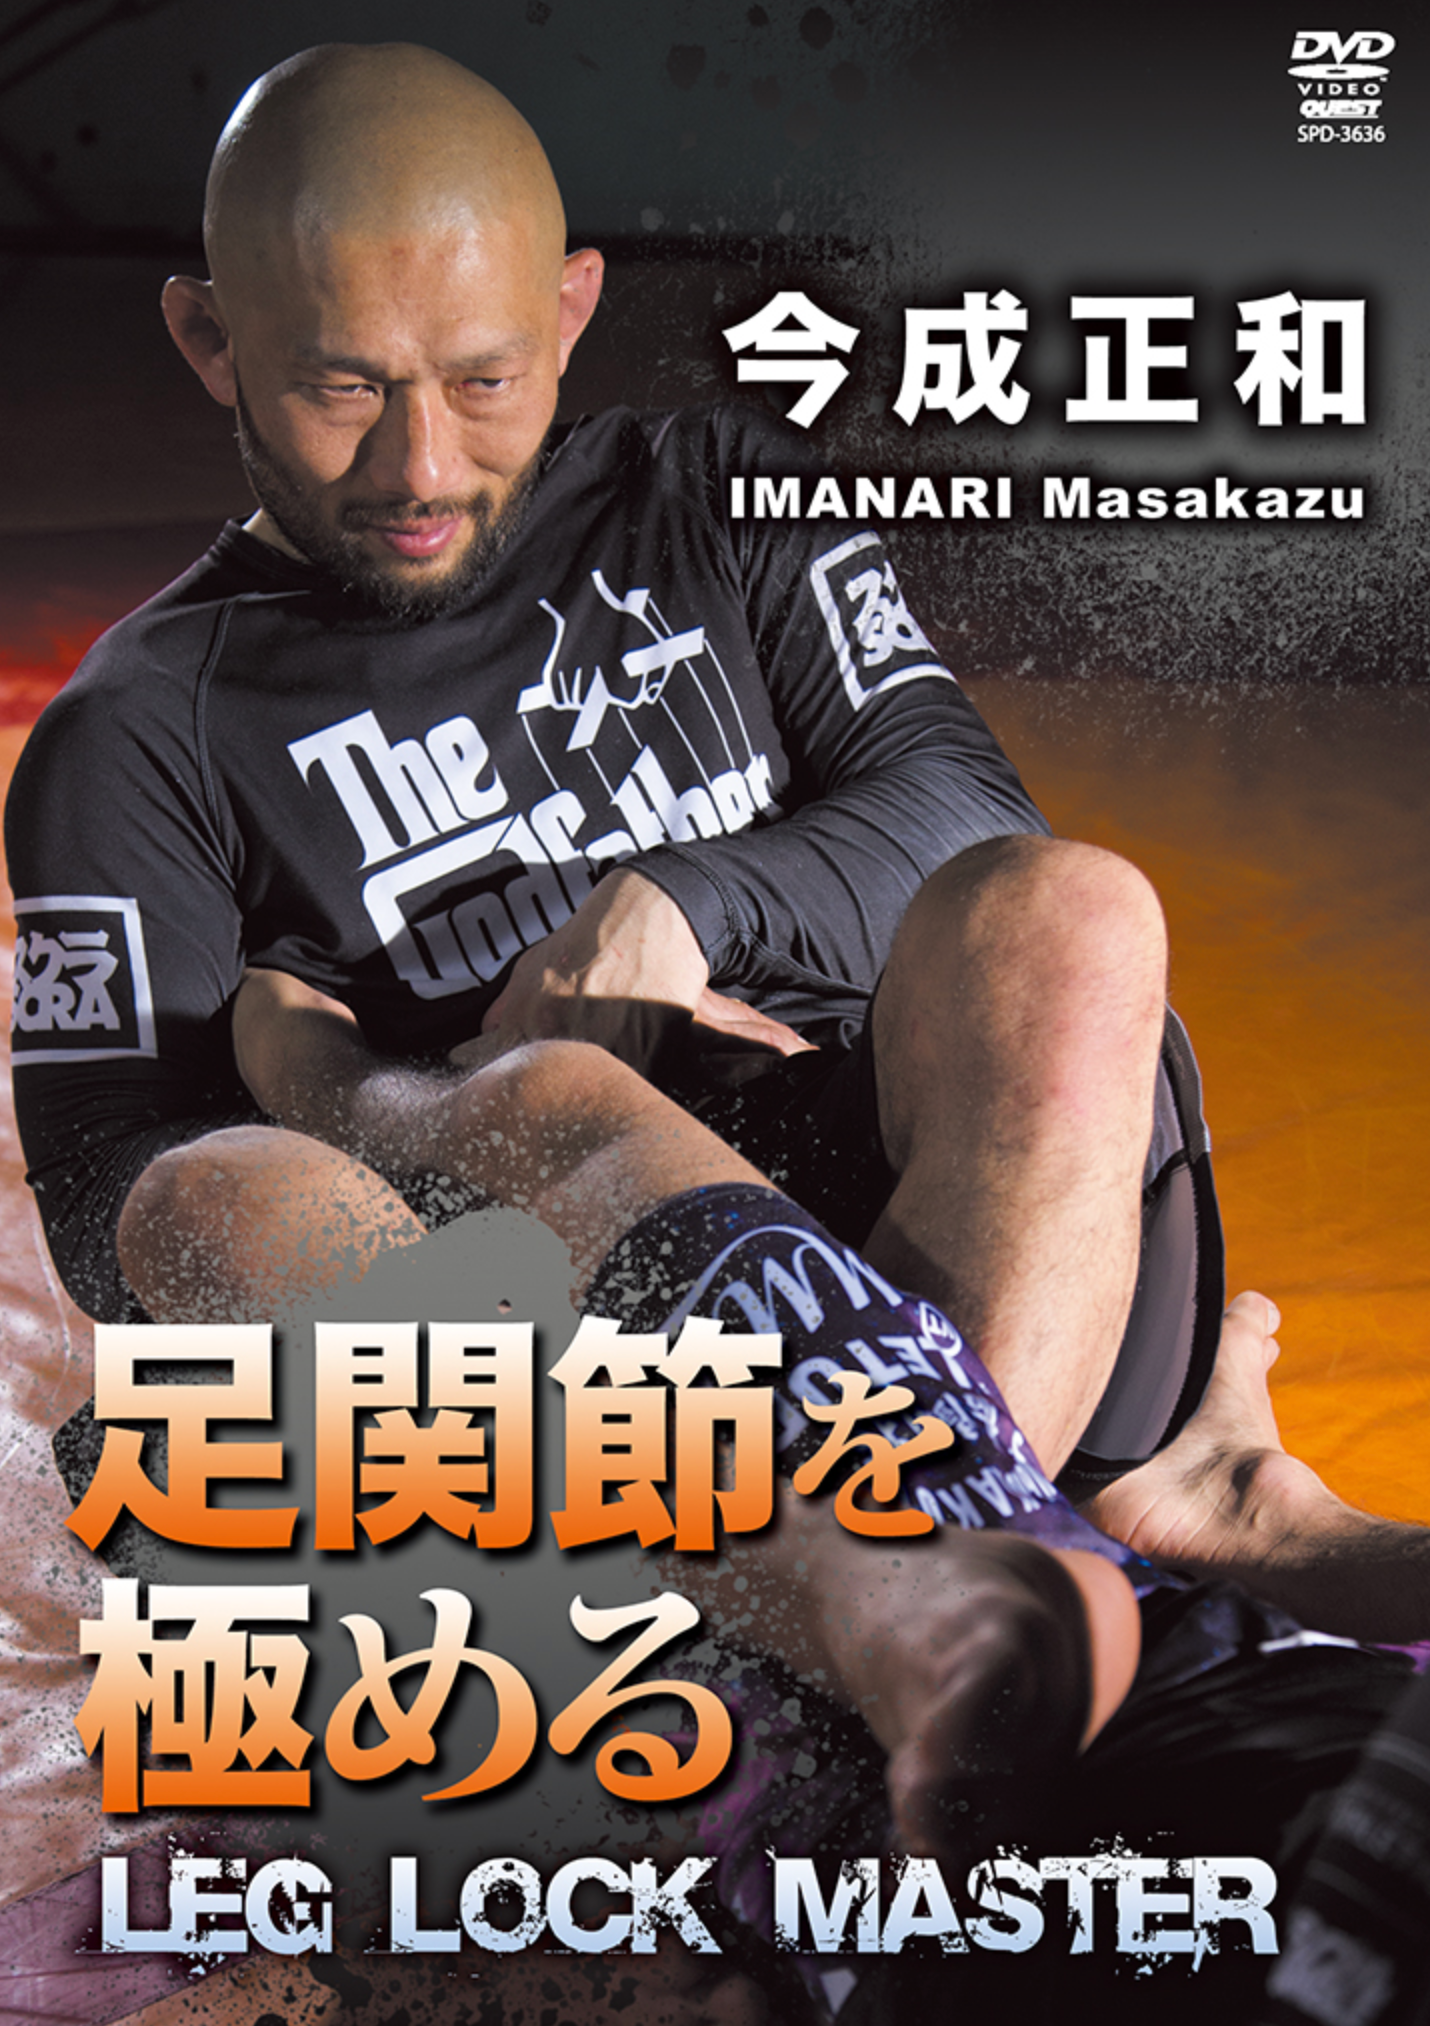 Leg Lock Master DVD from Masakazu Imanari - Budovideos Inc